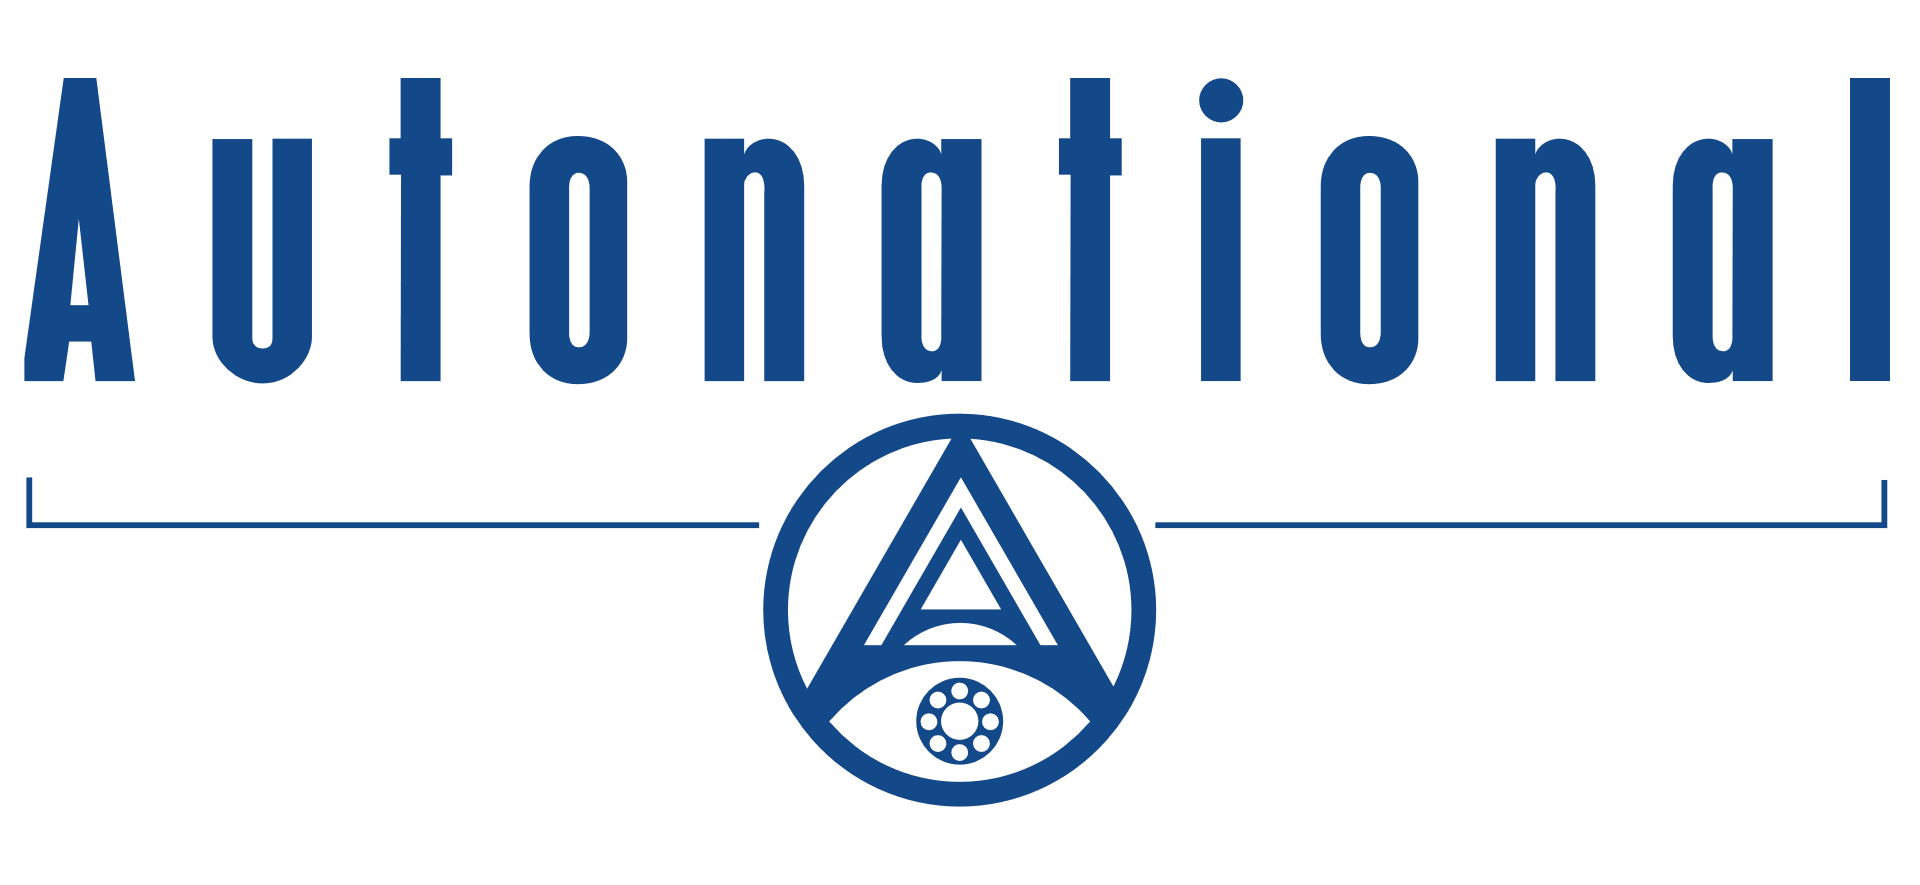 Autonational Logo